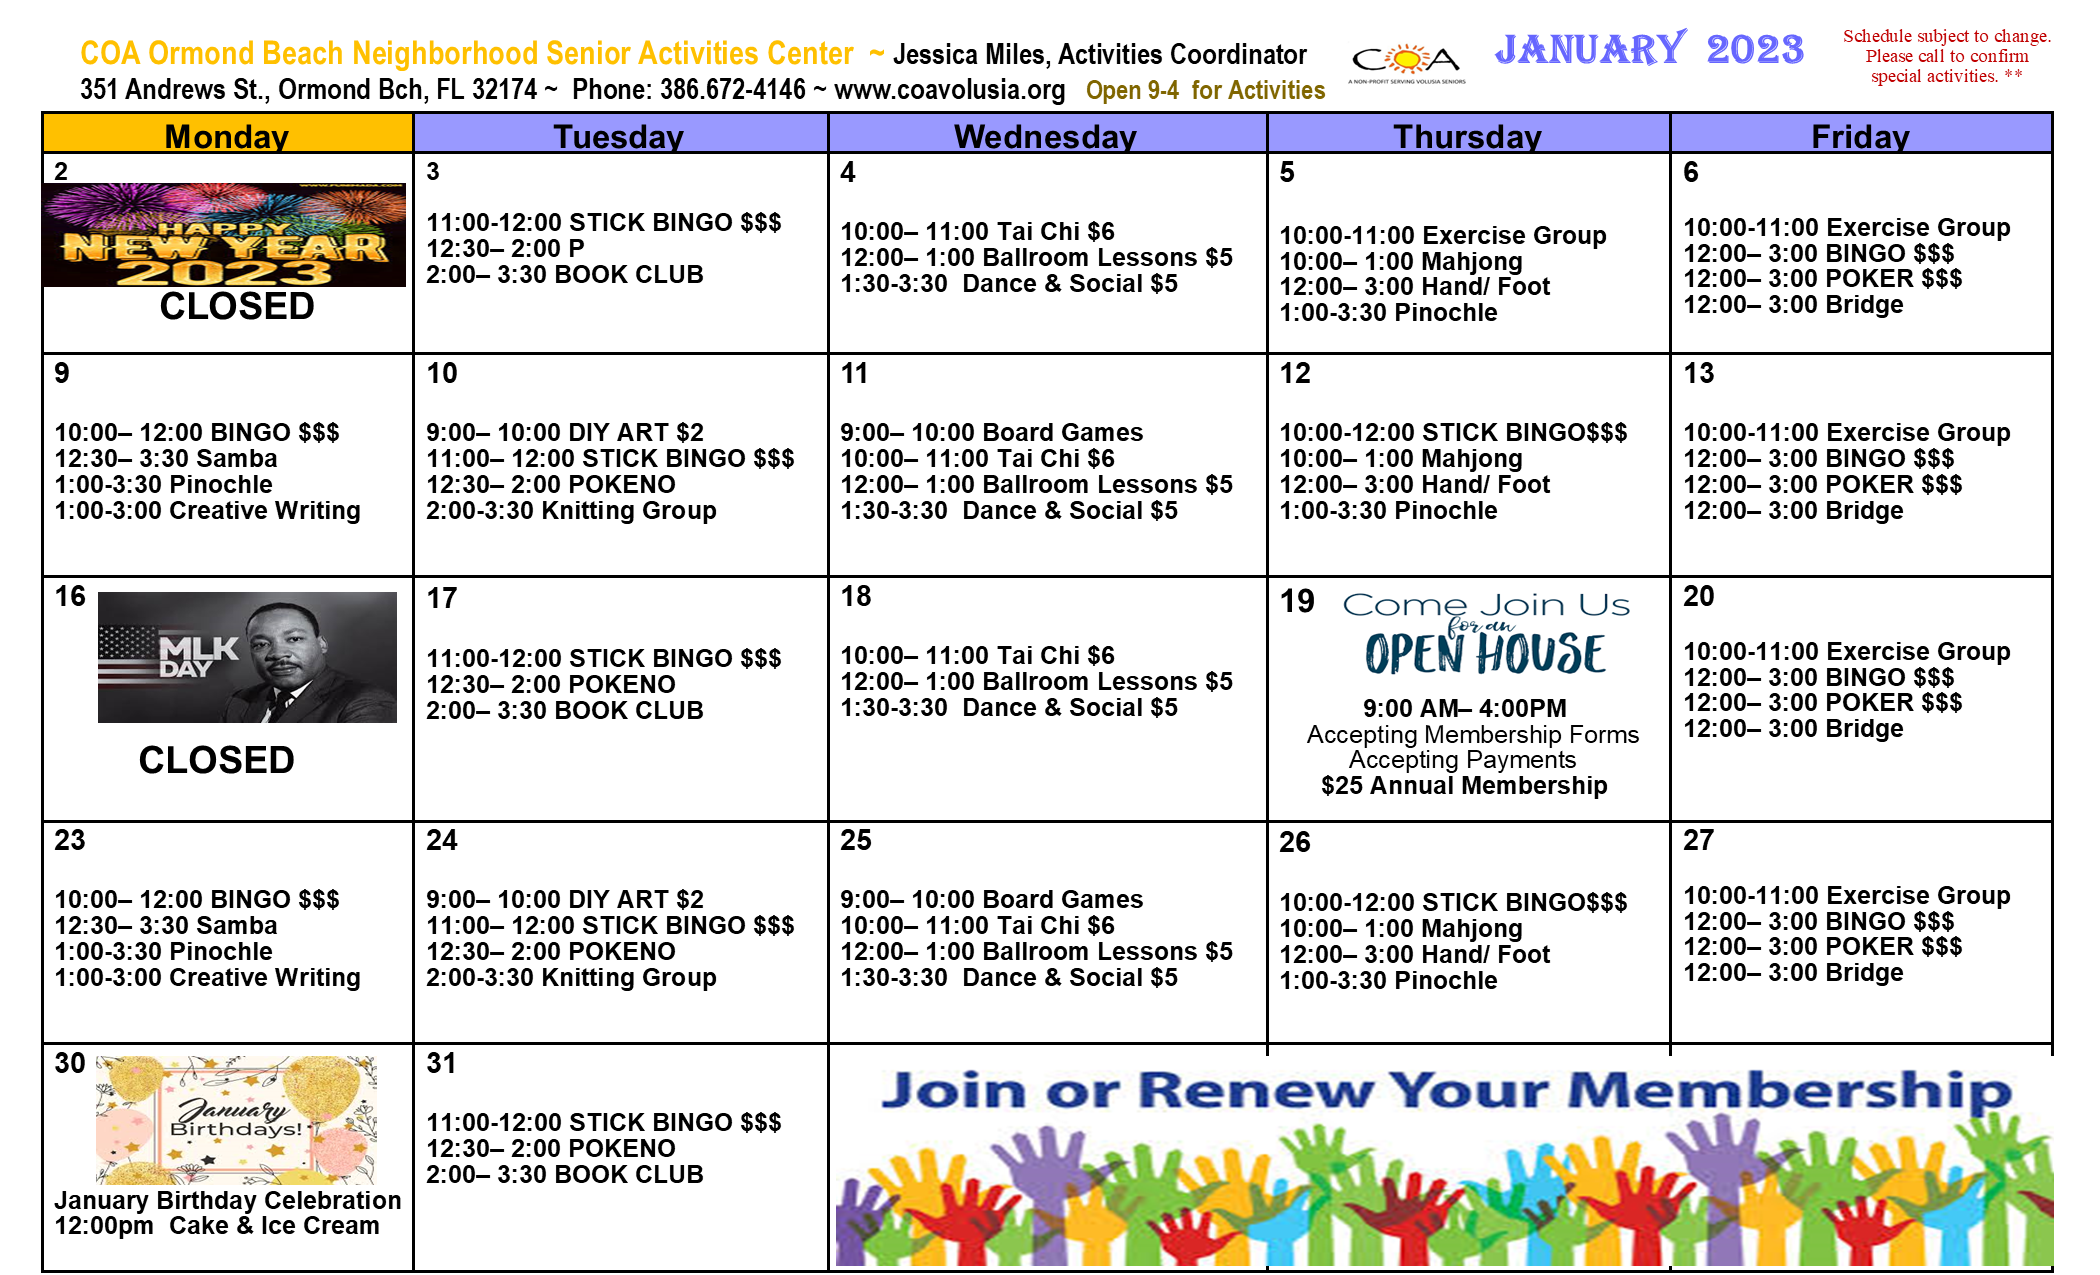 OBSC January 2023 Activities Calendar